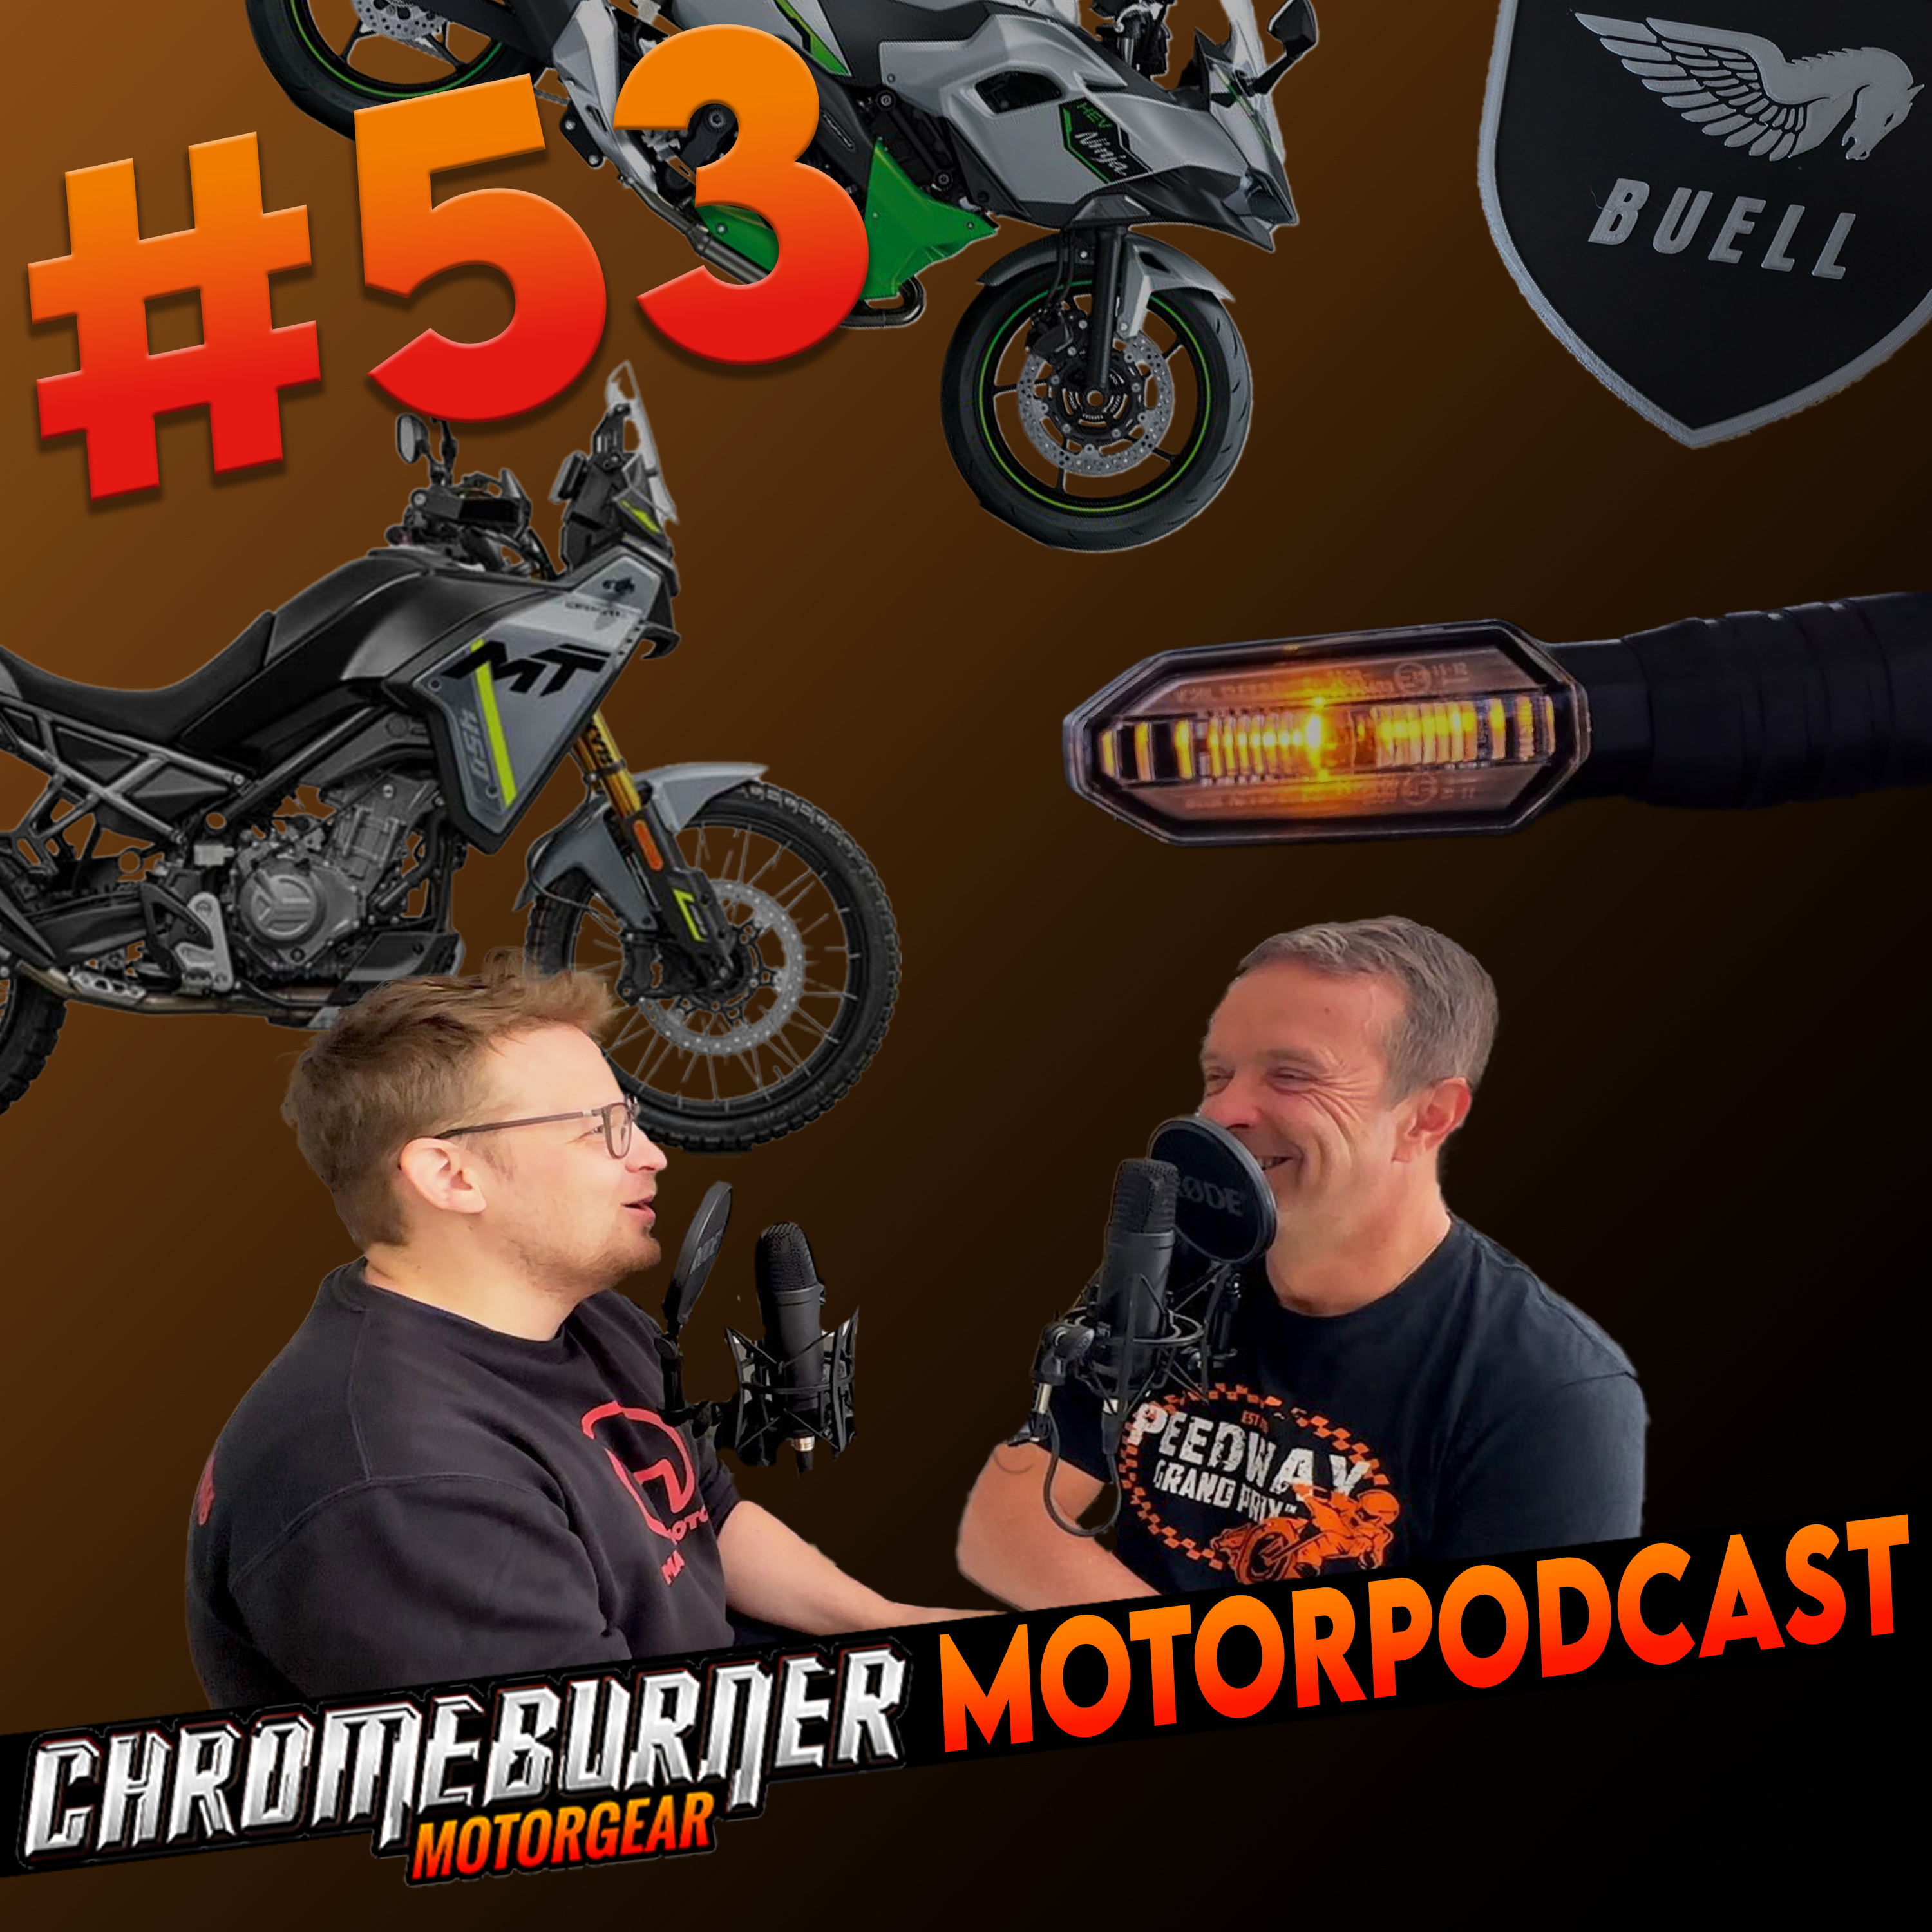 ChromeBurner MotorPodcast #53: Boordevol motornieuws